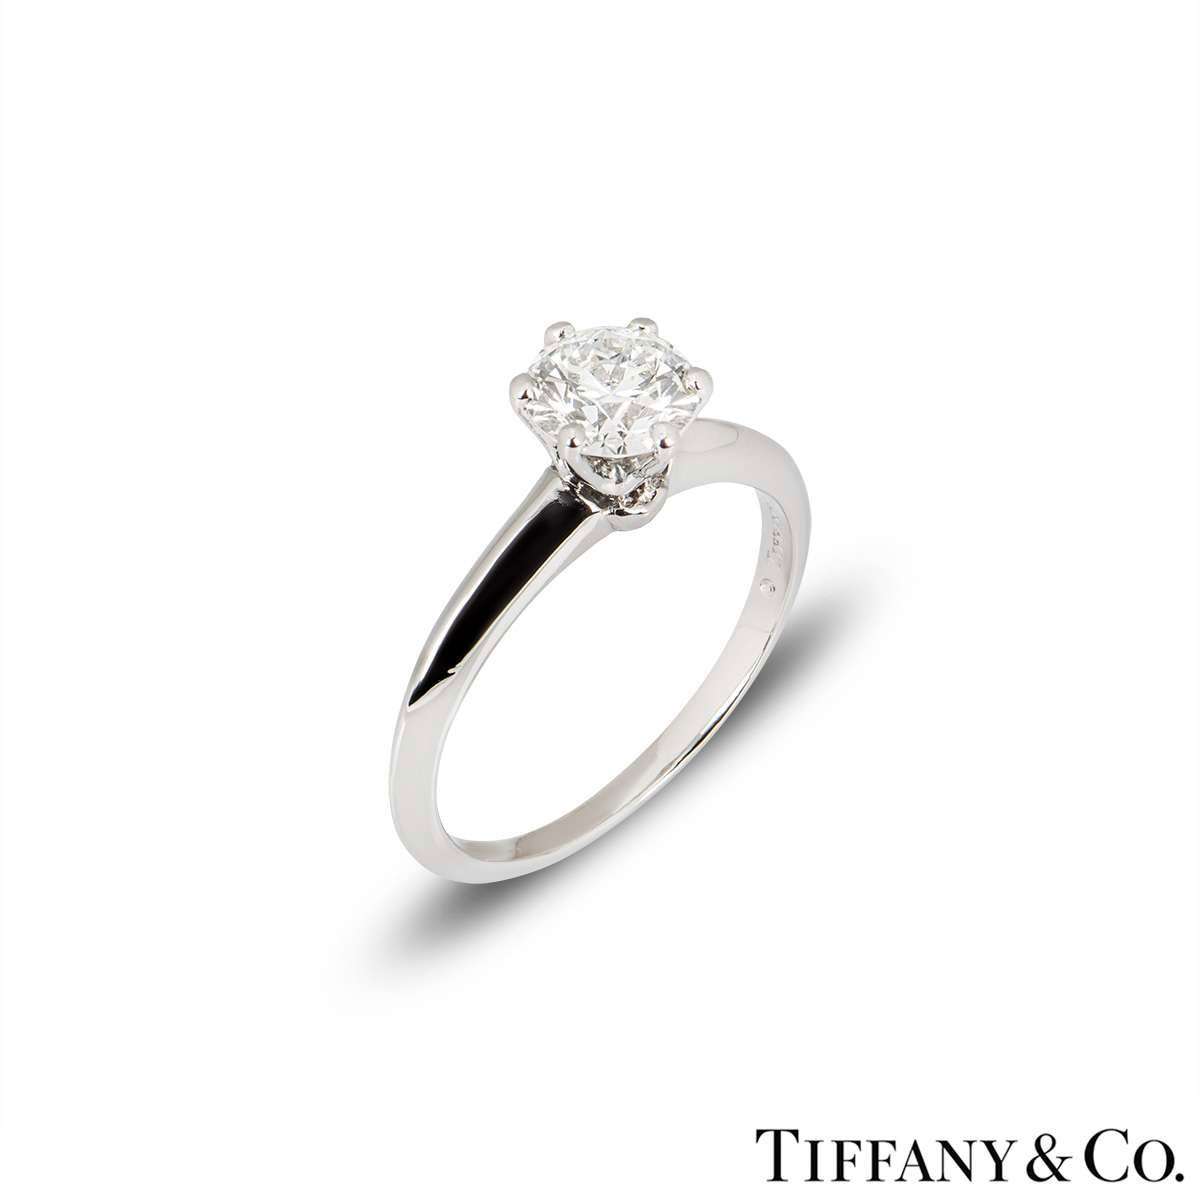 Tiffany & Co. Platinum Diamond Setting Ring 1.05ct G/VS1